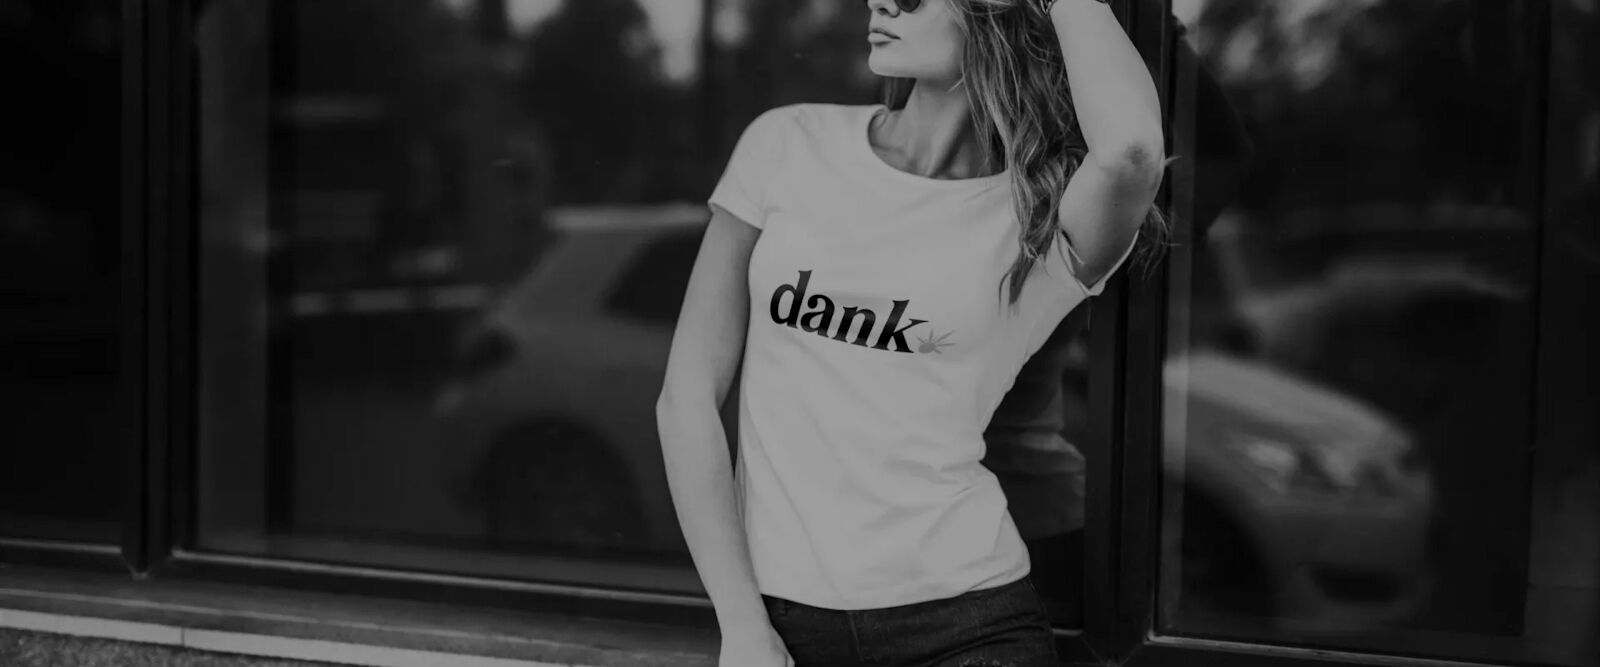 Dank Seeds Bank woman model with DANK logo t-shirt & sunglasses.